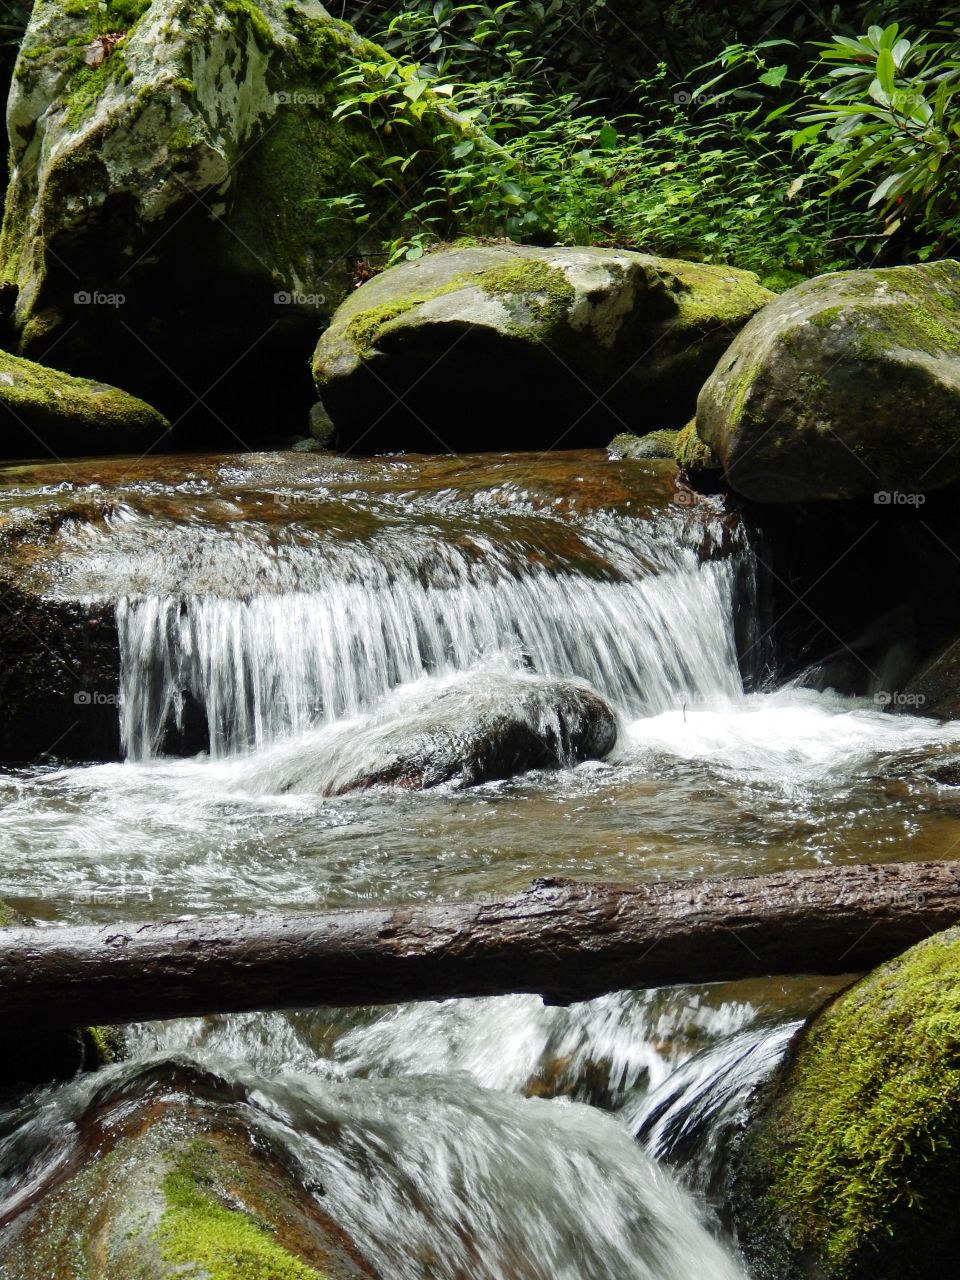 Small waterfall and moss covered boulders on Darnell creek in Dillard Georgia